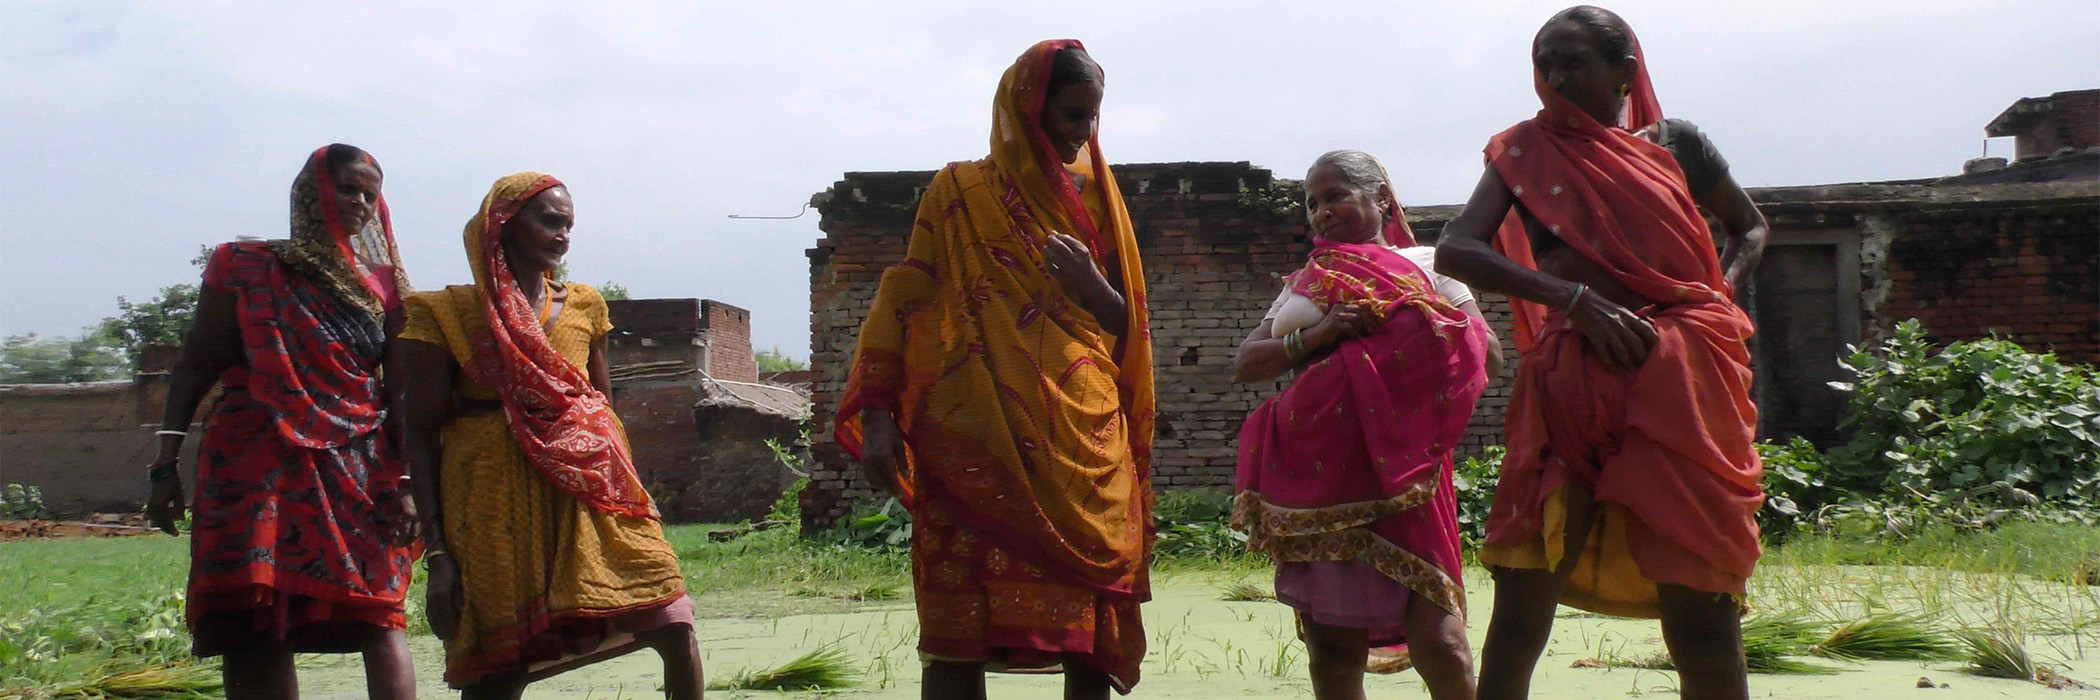 Badhuli village women standing in flooded rice field